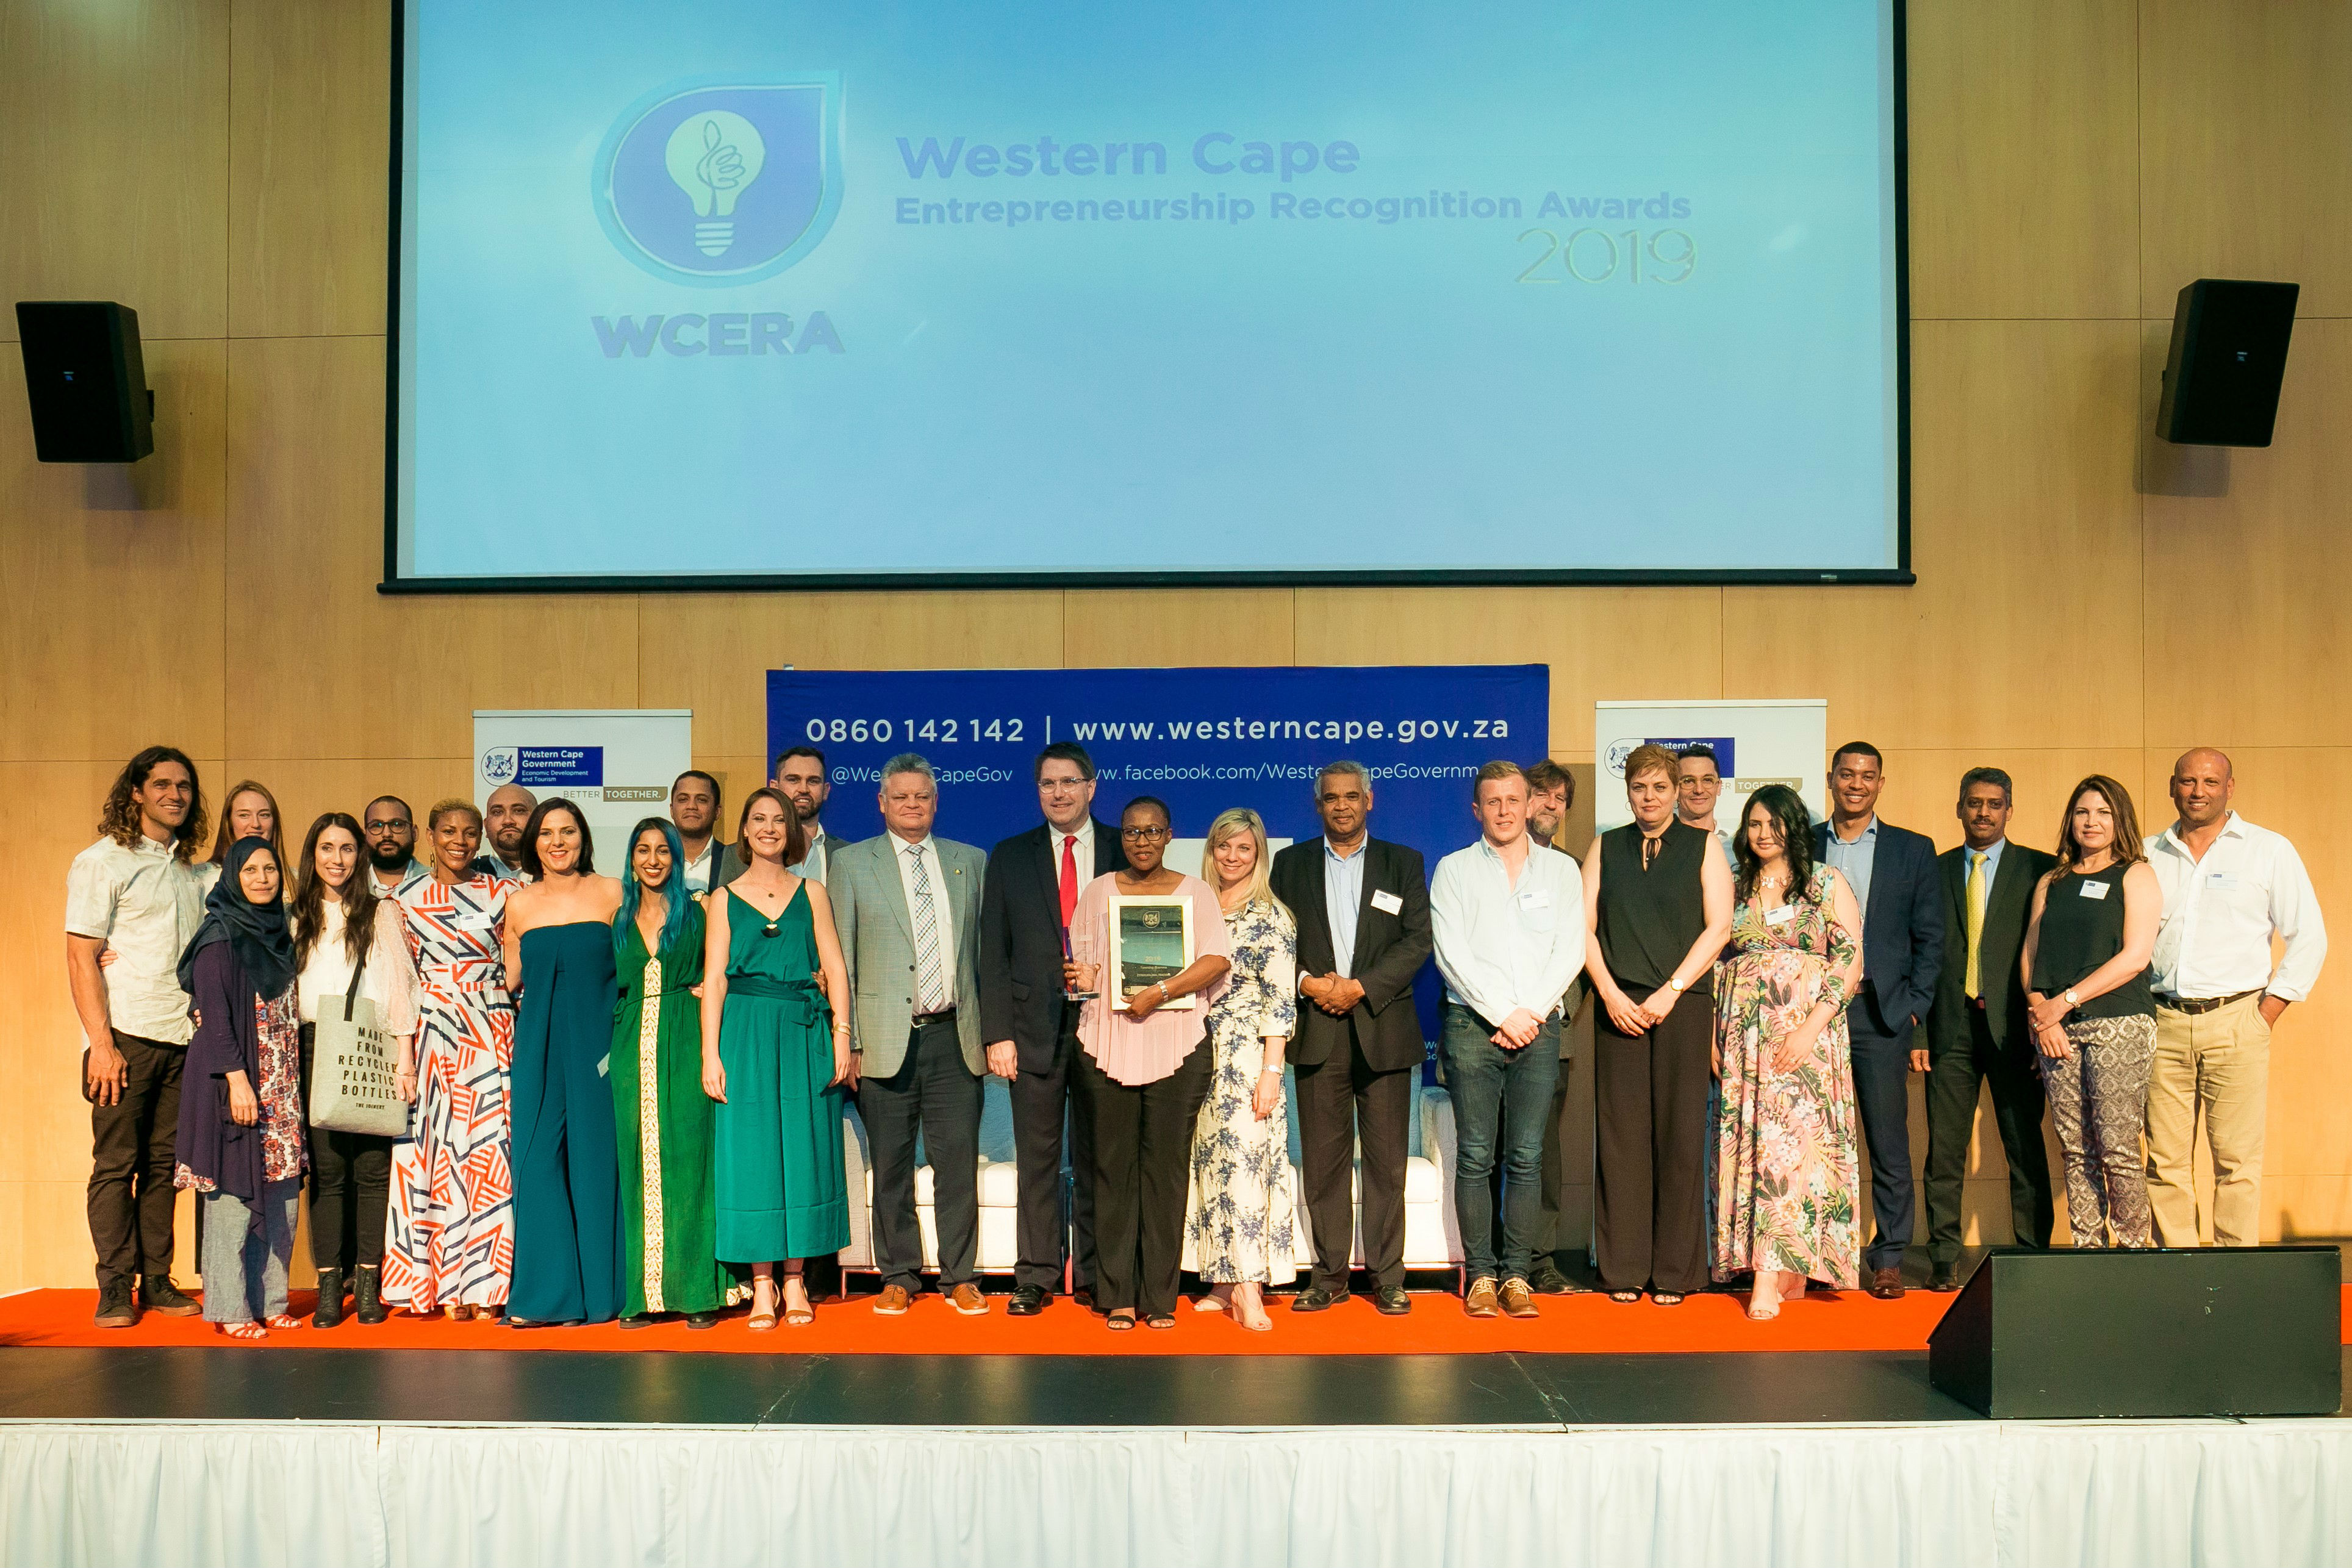 Western Cape Entrepreneurship Recognition Awards 2019